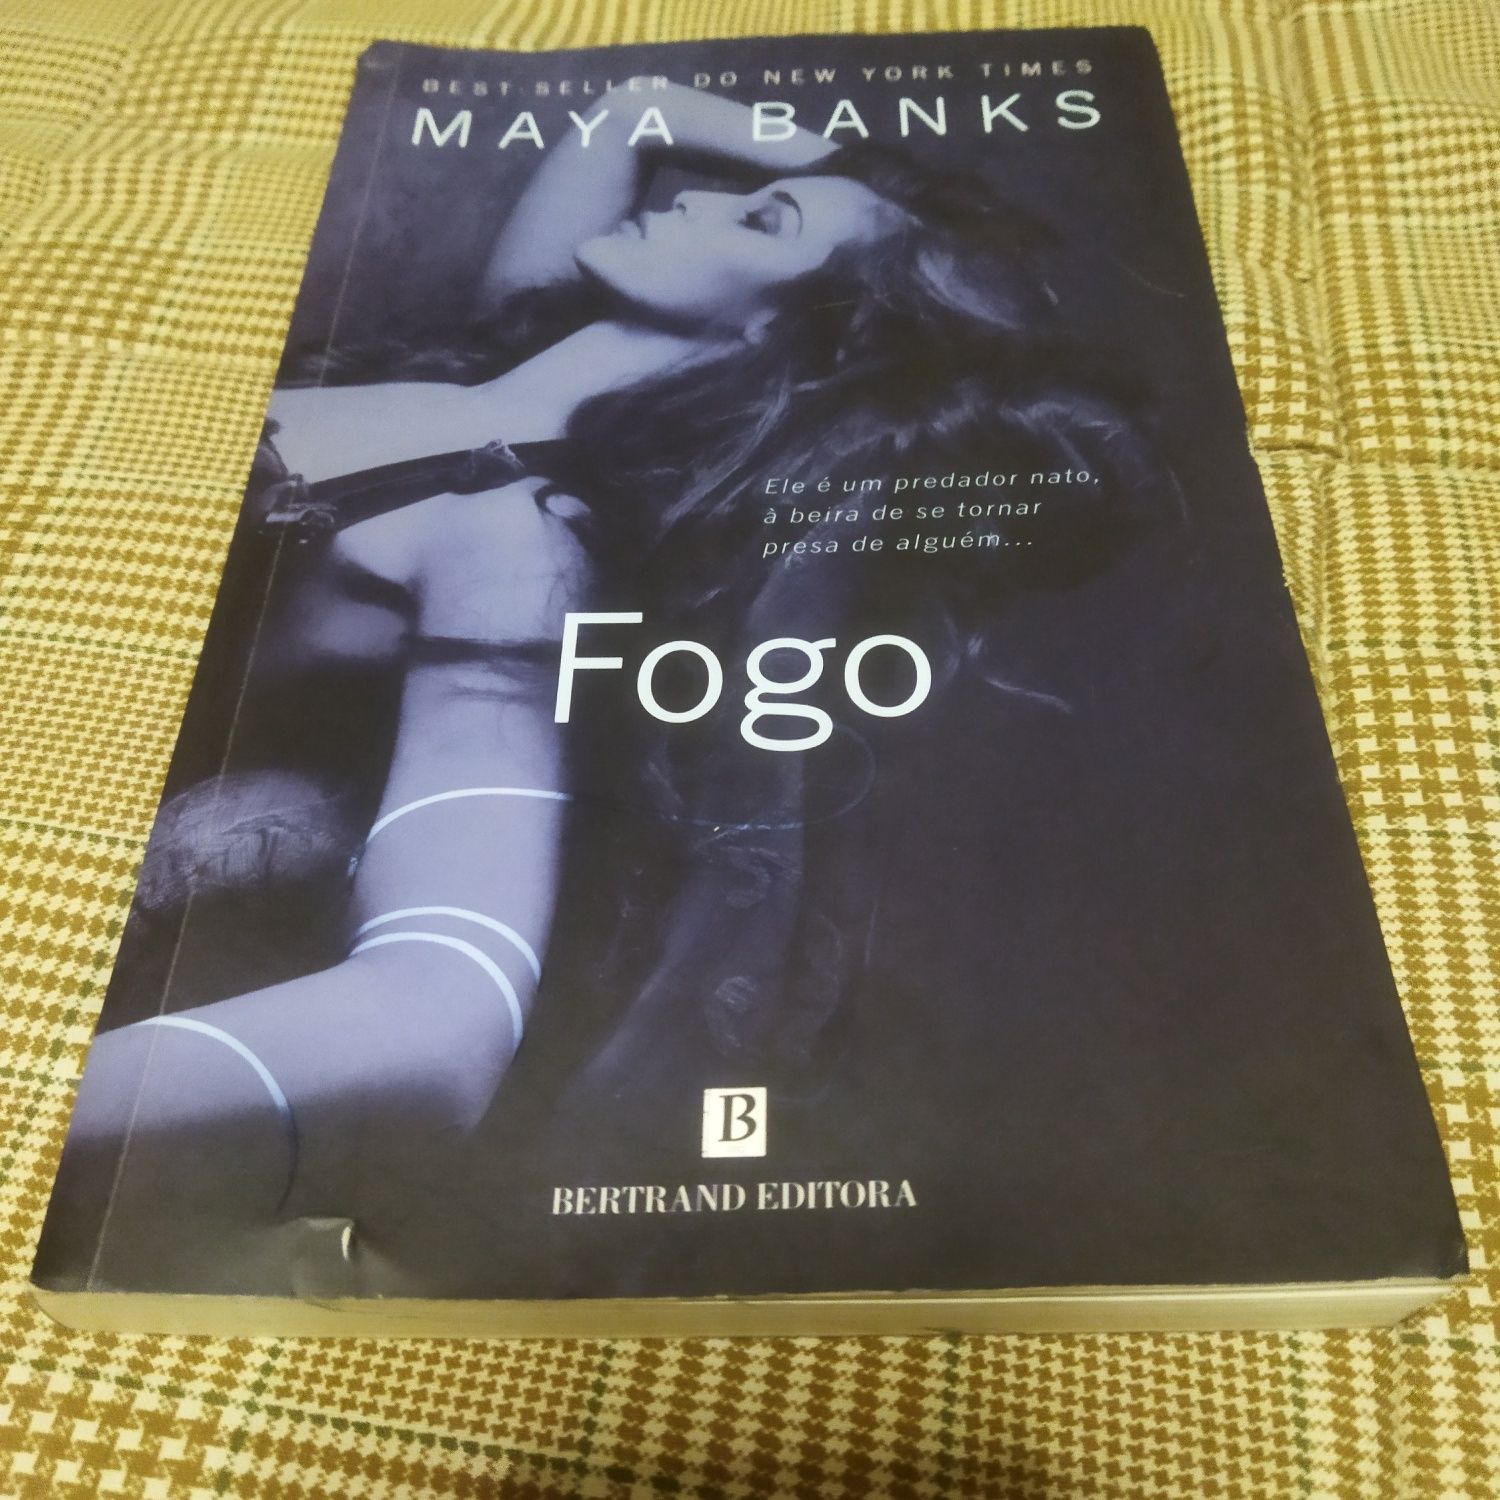 Trilogia Maya Banks Delírio,, Obsessão e Fogo